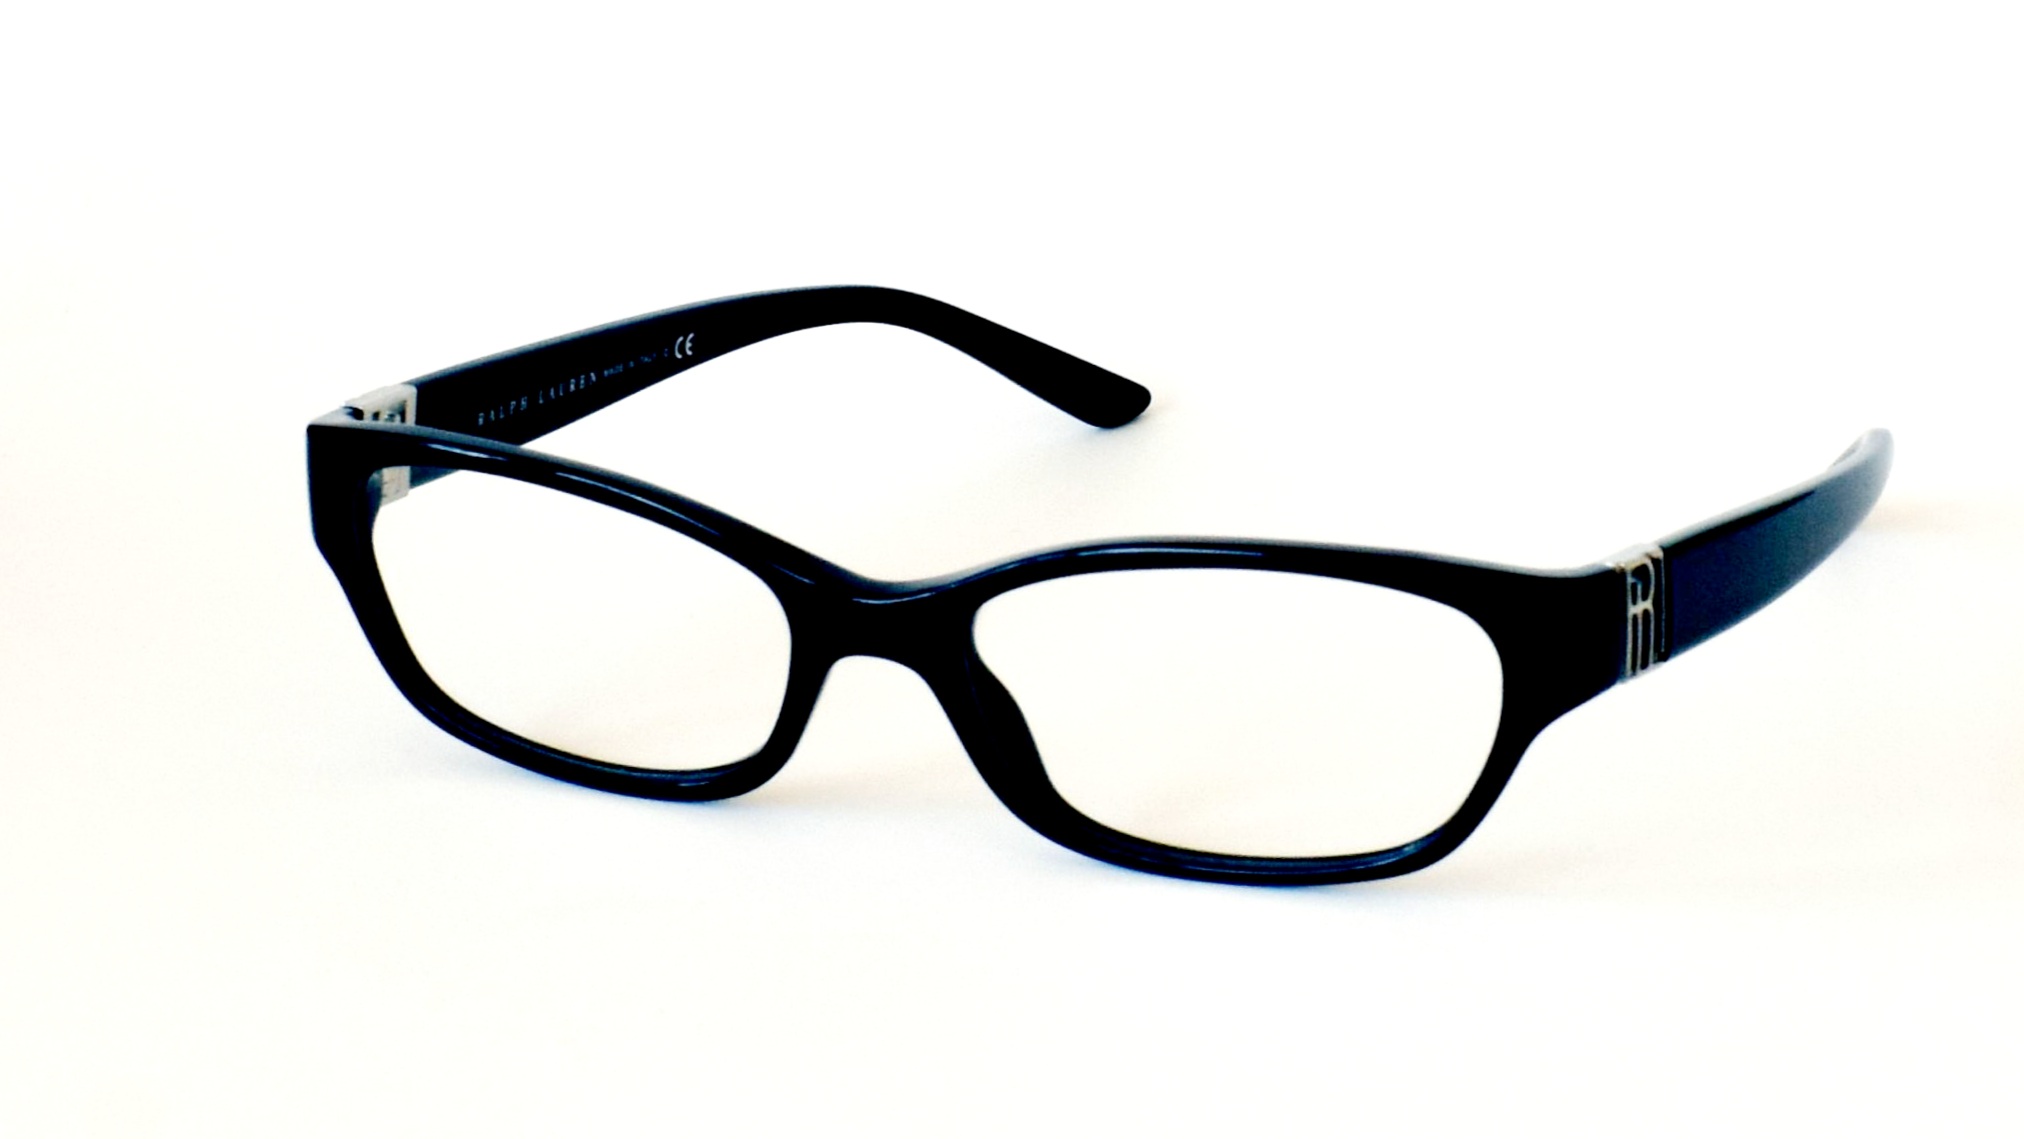 Montatura occhiali da vista RALPH LAUREN RL 6081 5001